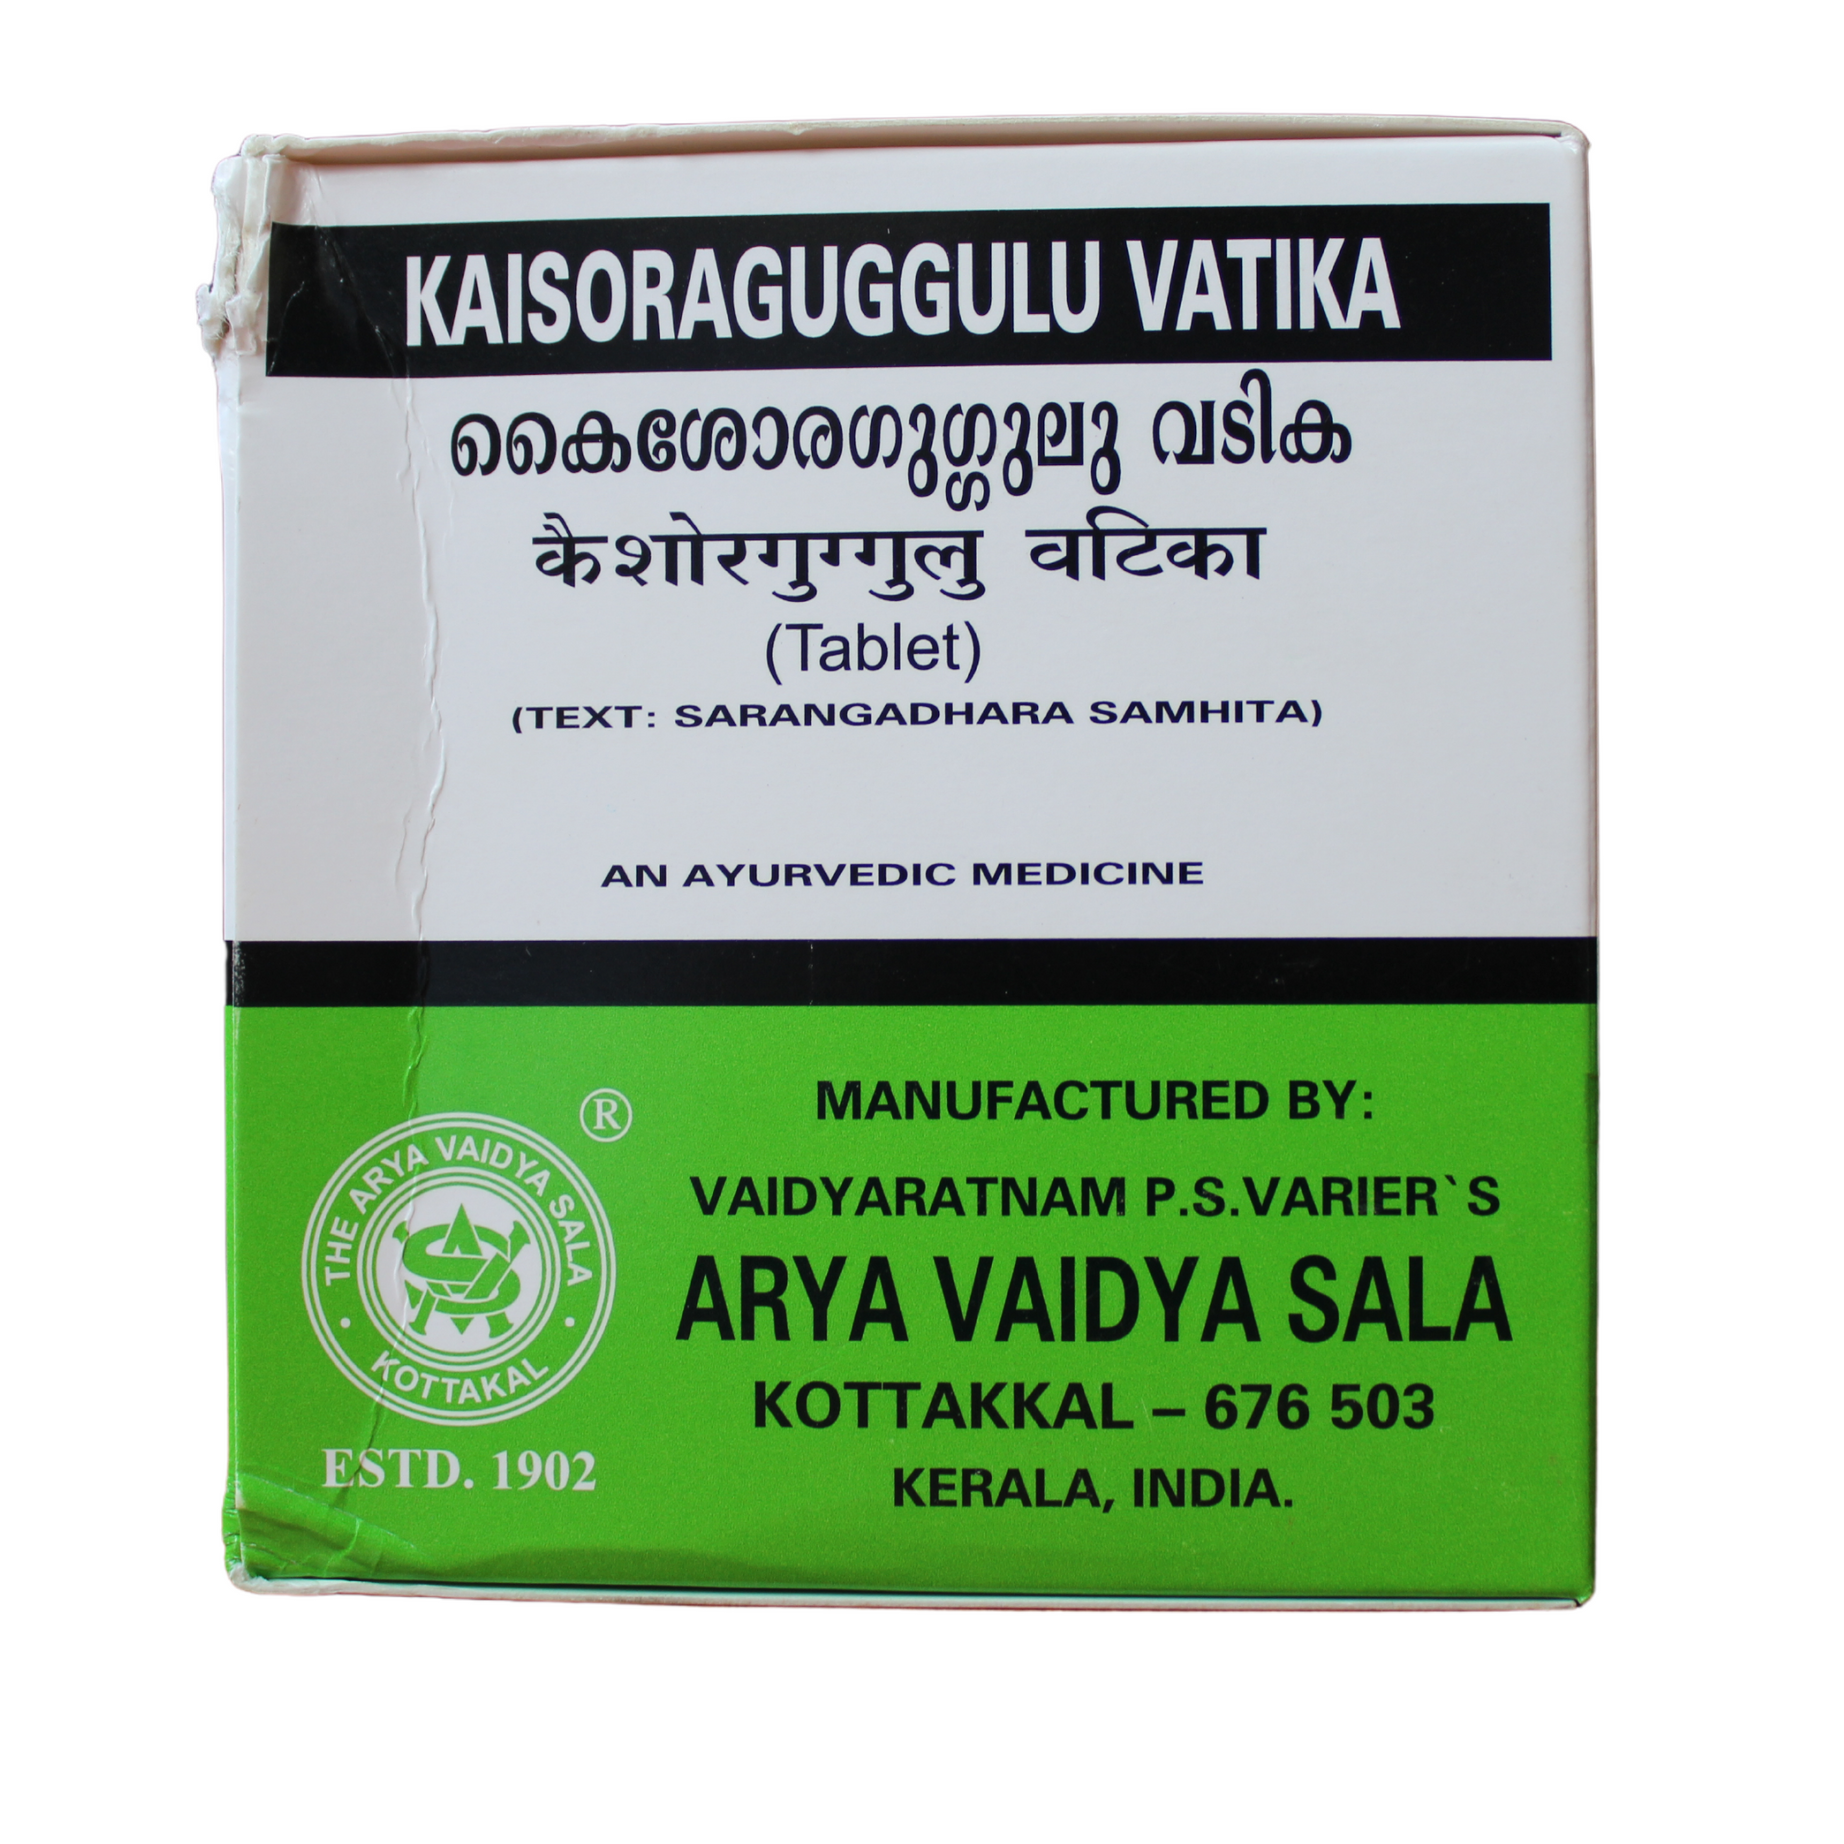 Shop Kottakkal Kaisora Guggulu Vatika - 10 Tablets at price 34.50 from Kottakkal Online - Ayush Care